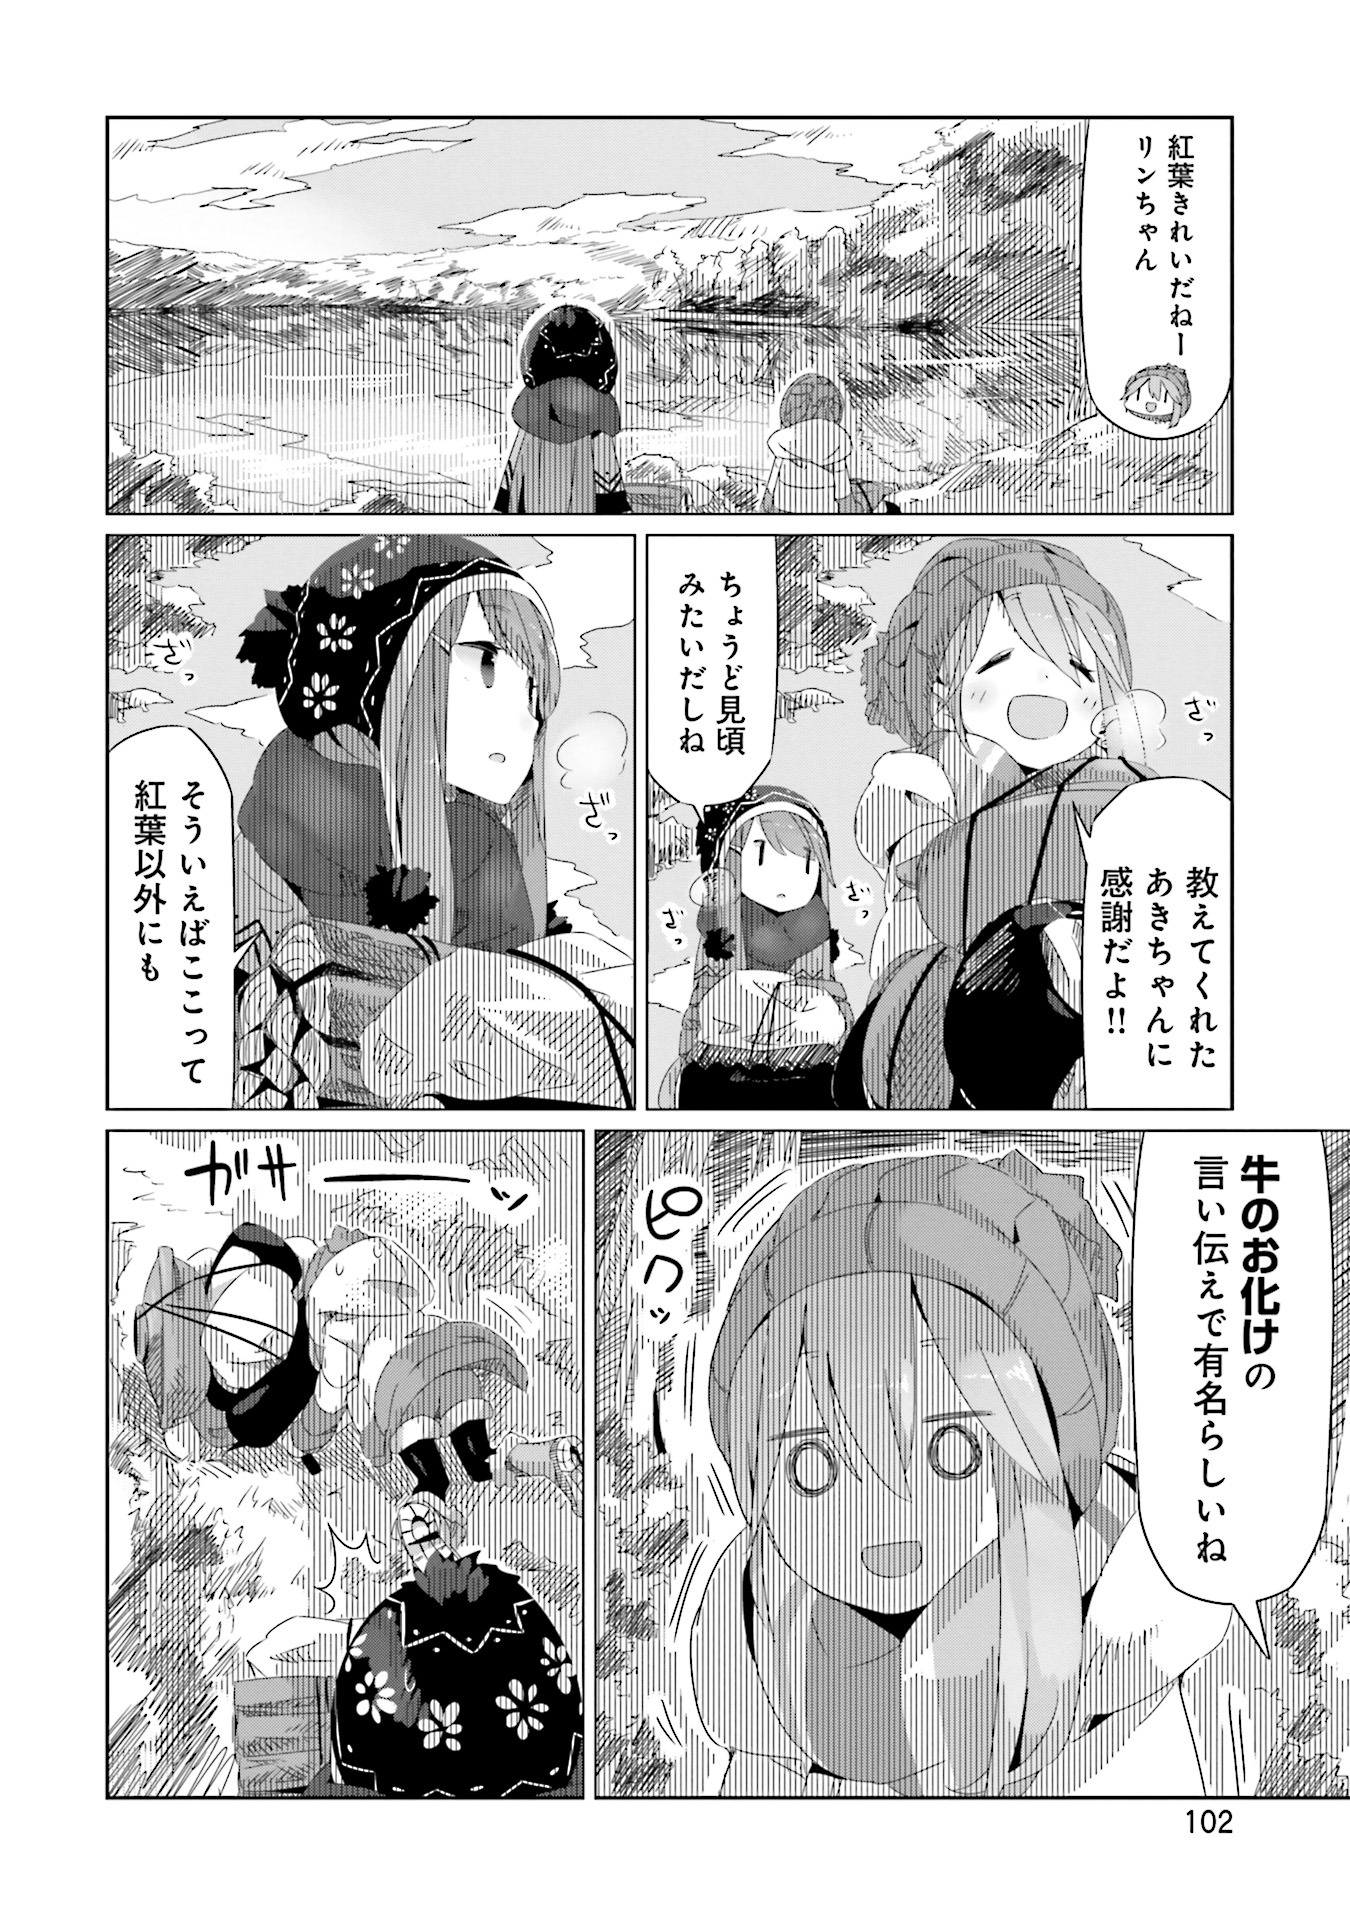 Yuru Camp - Chapter 11 - Page 1